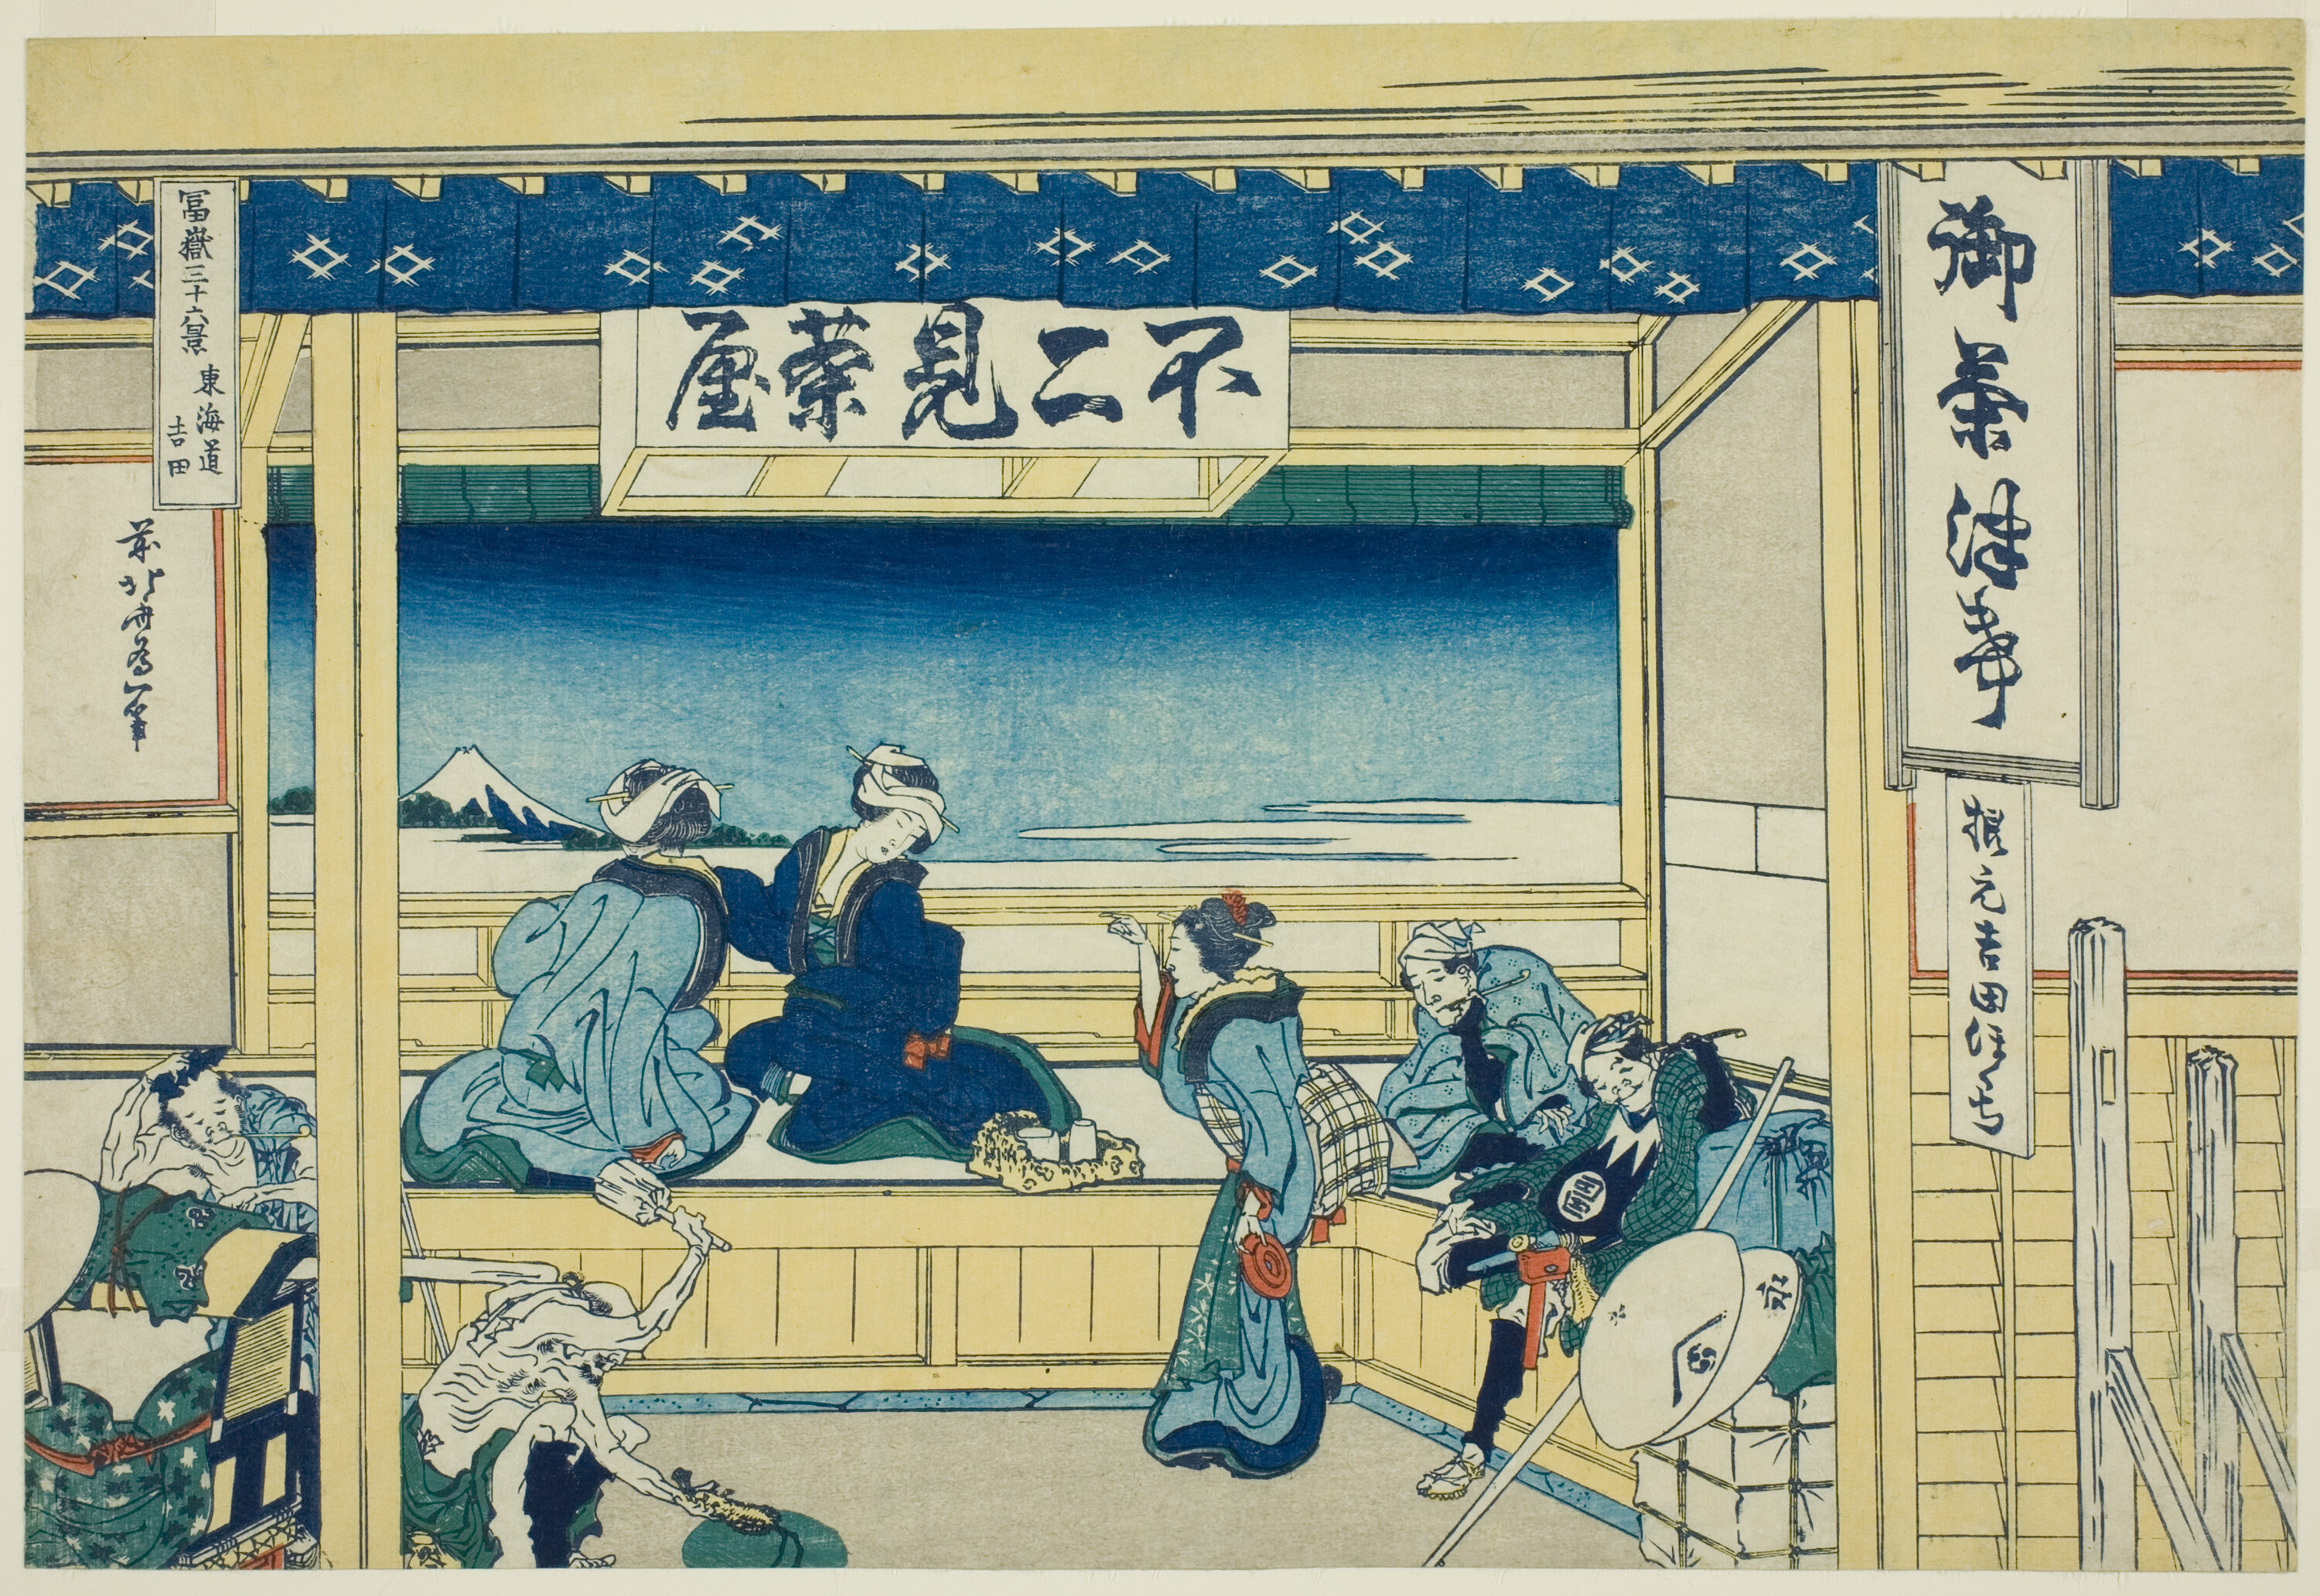 Katsushika Hokusai. Yoshida on the Tōkaidō, from the series Thirty-six Views of Mount Fuji